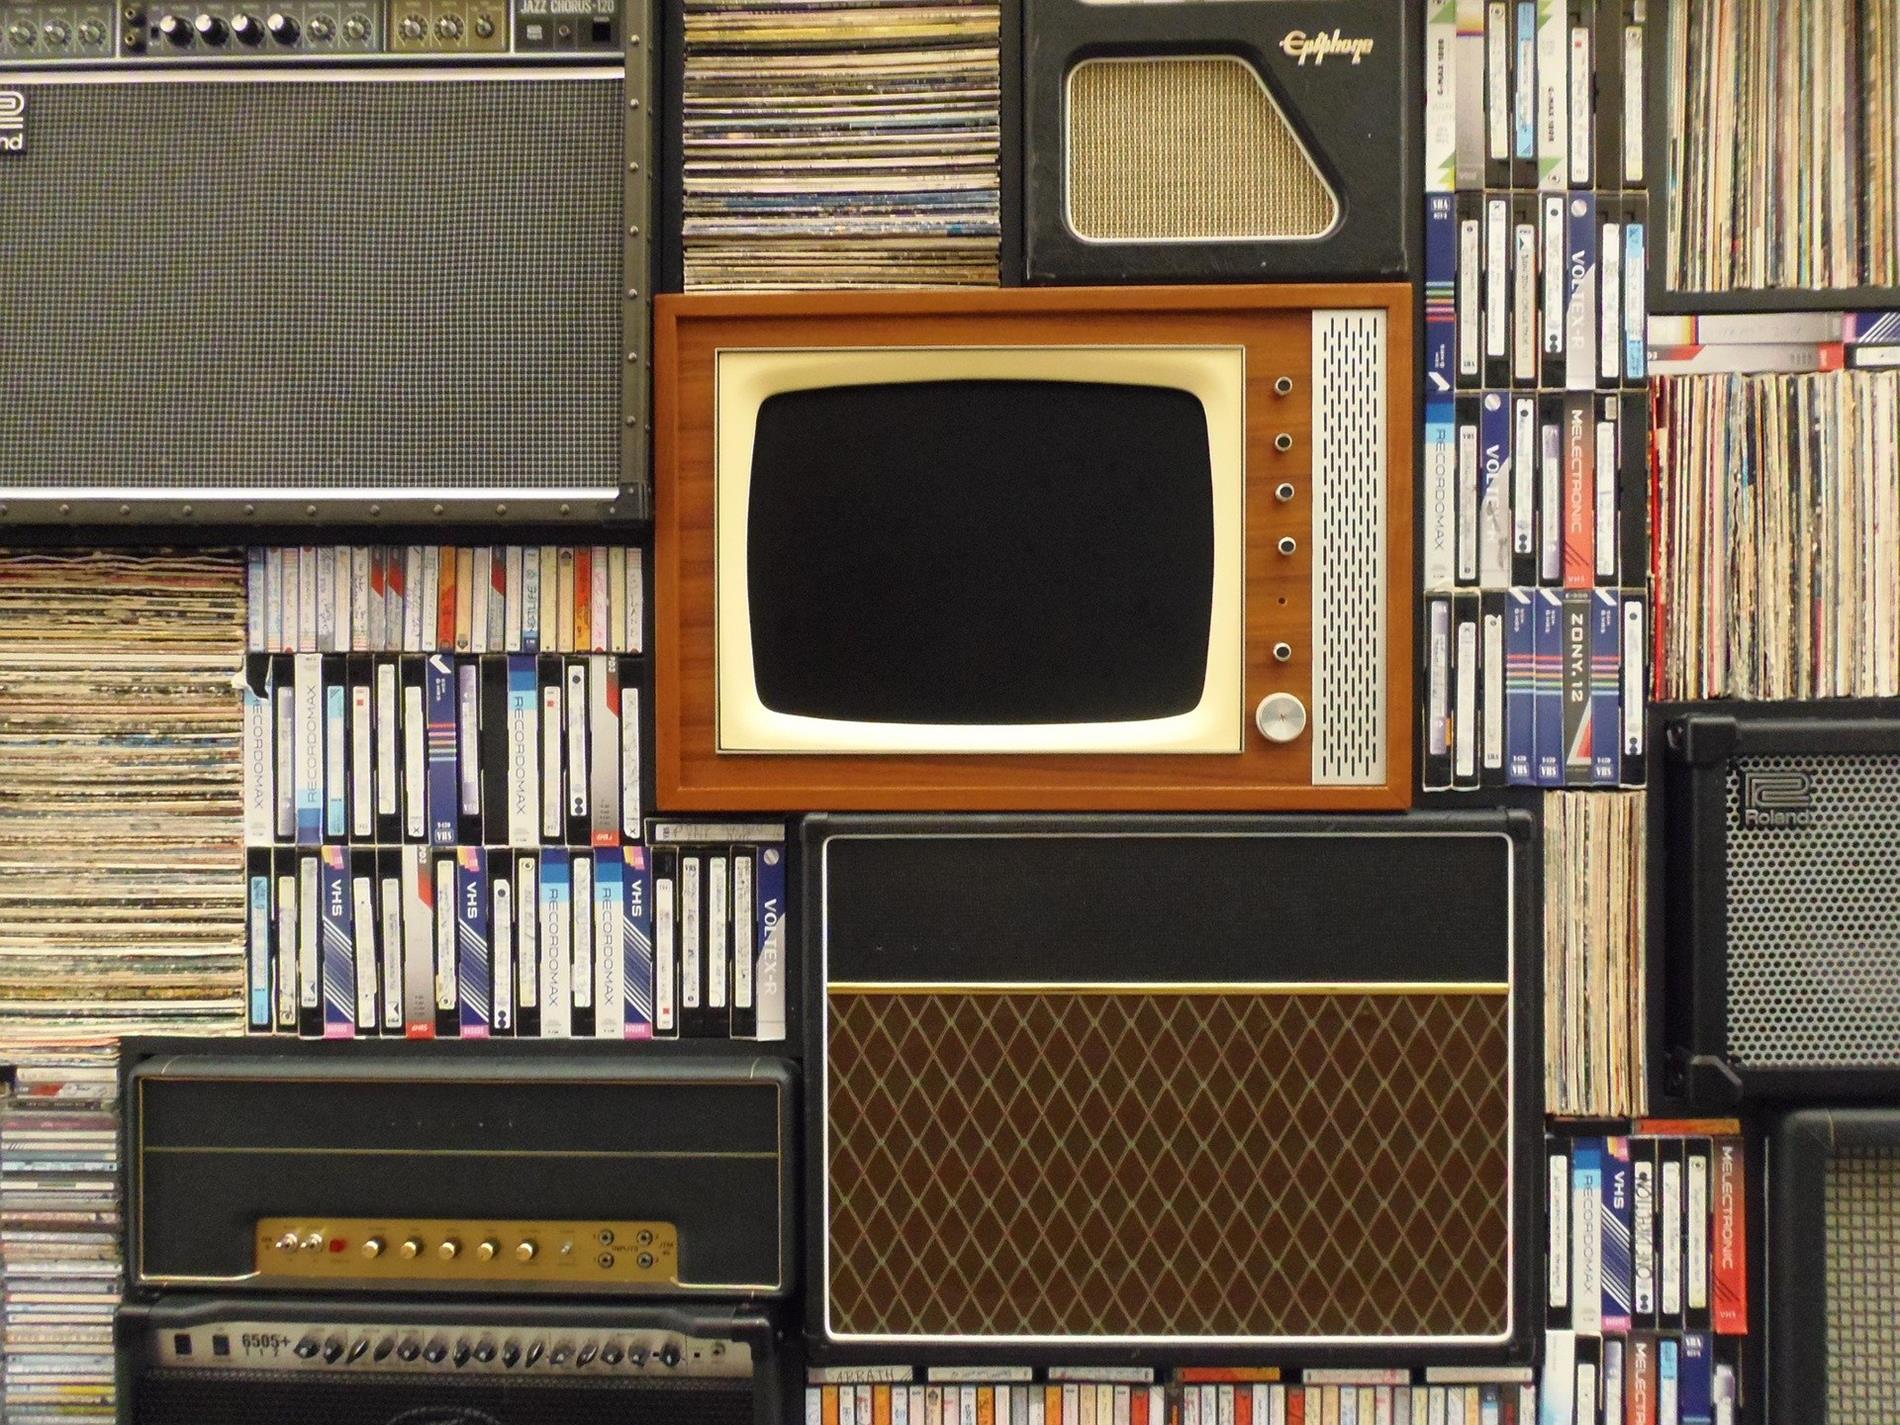 retro television on shelf with books